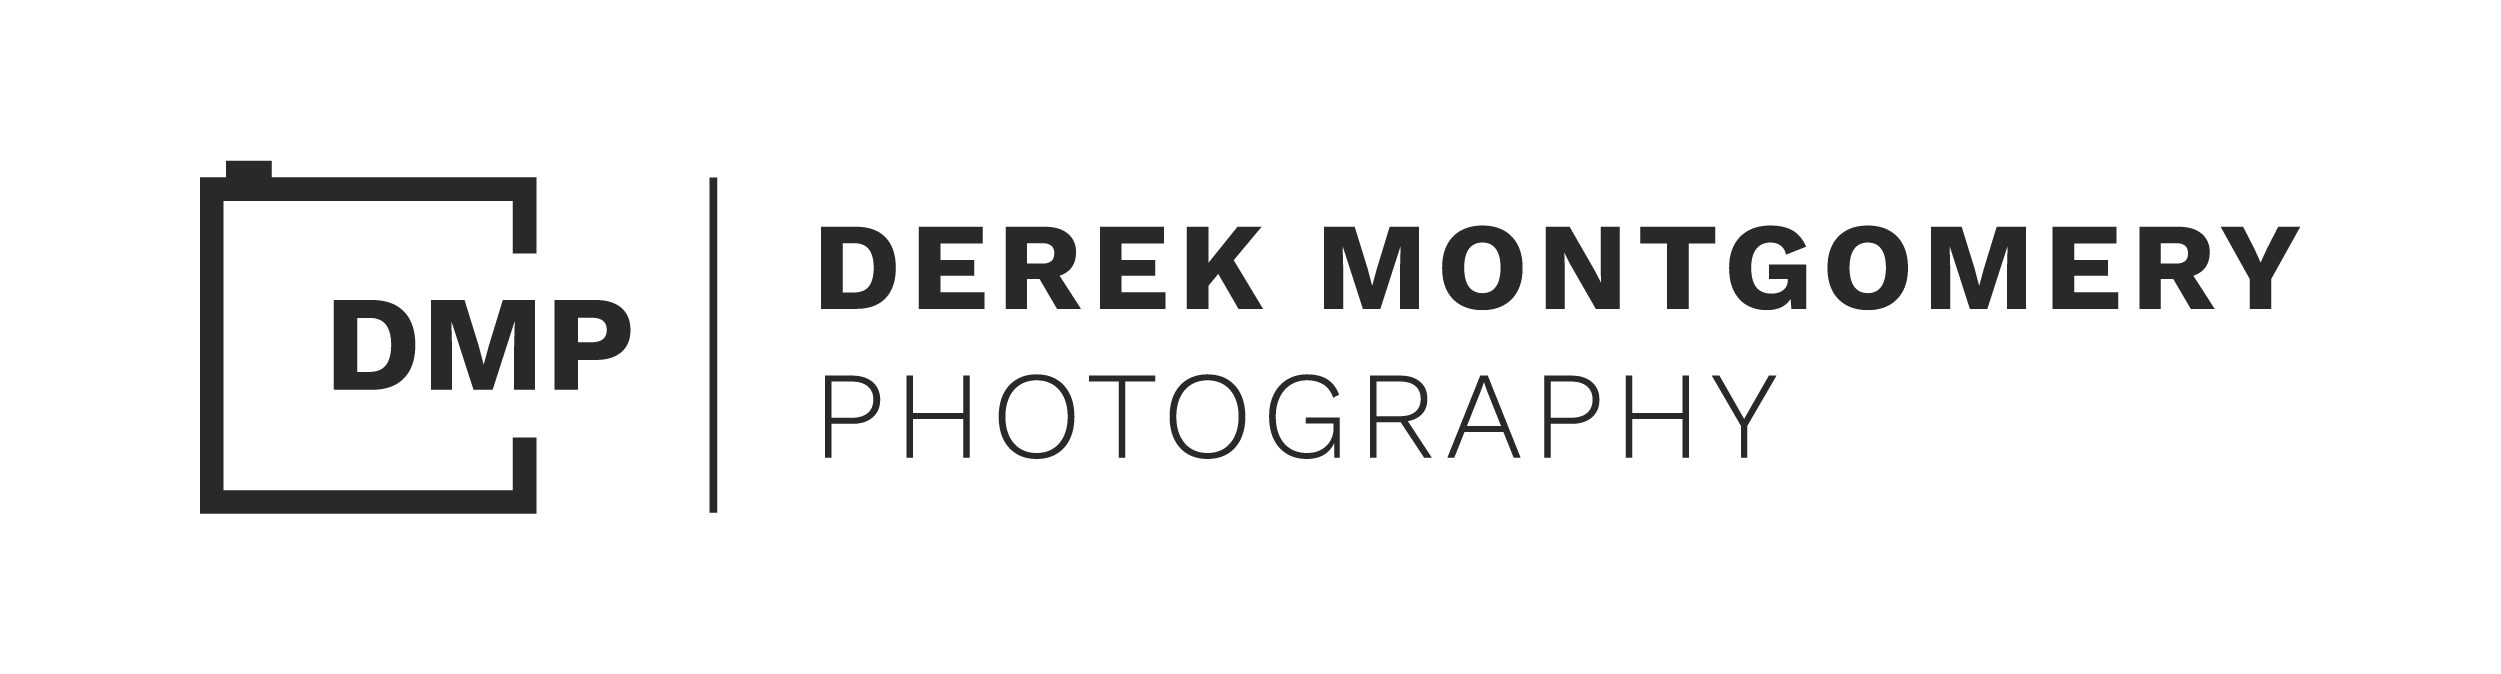 Derek Montgomery Photography